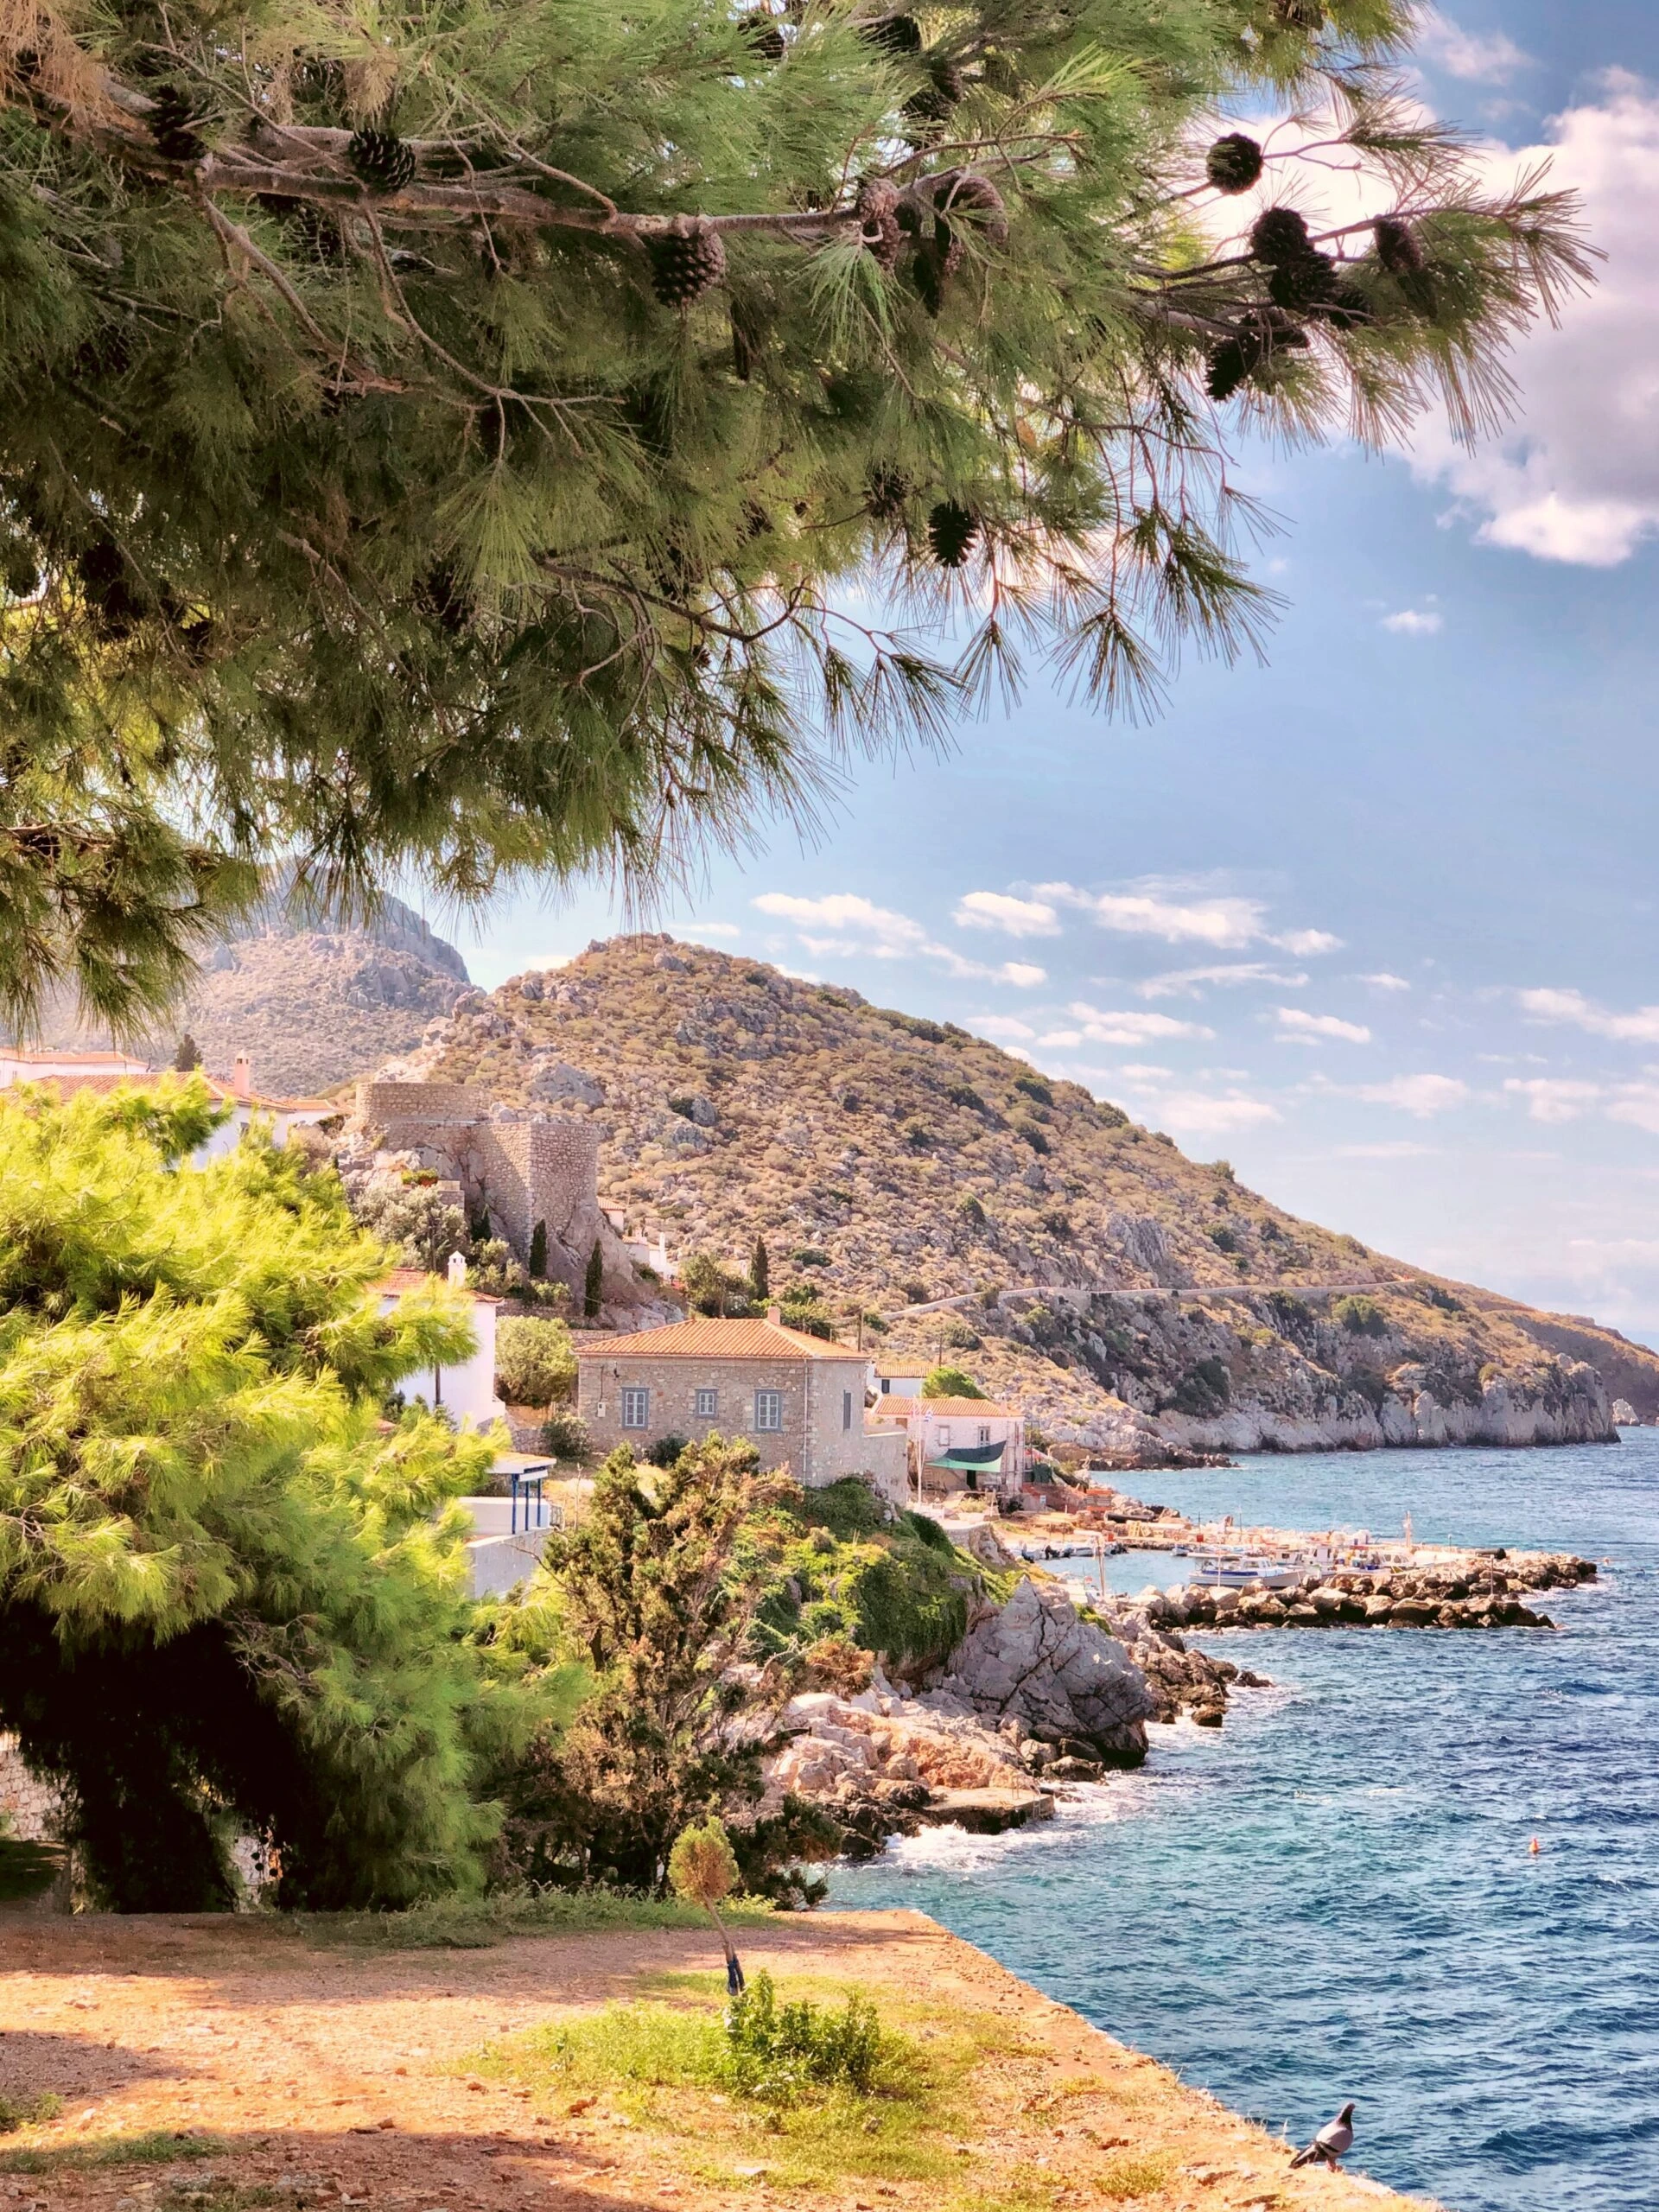 despina-galani-Greek Island of Hydra beach with pine tree in foreground-unsplash-scaled